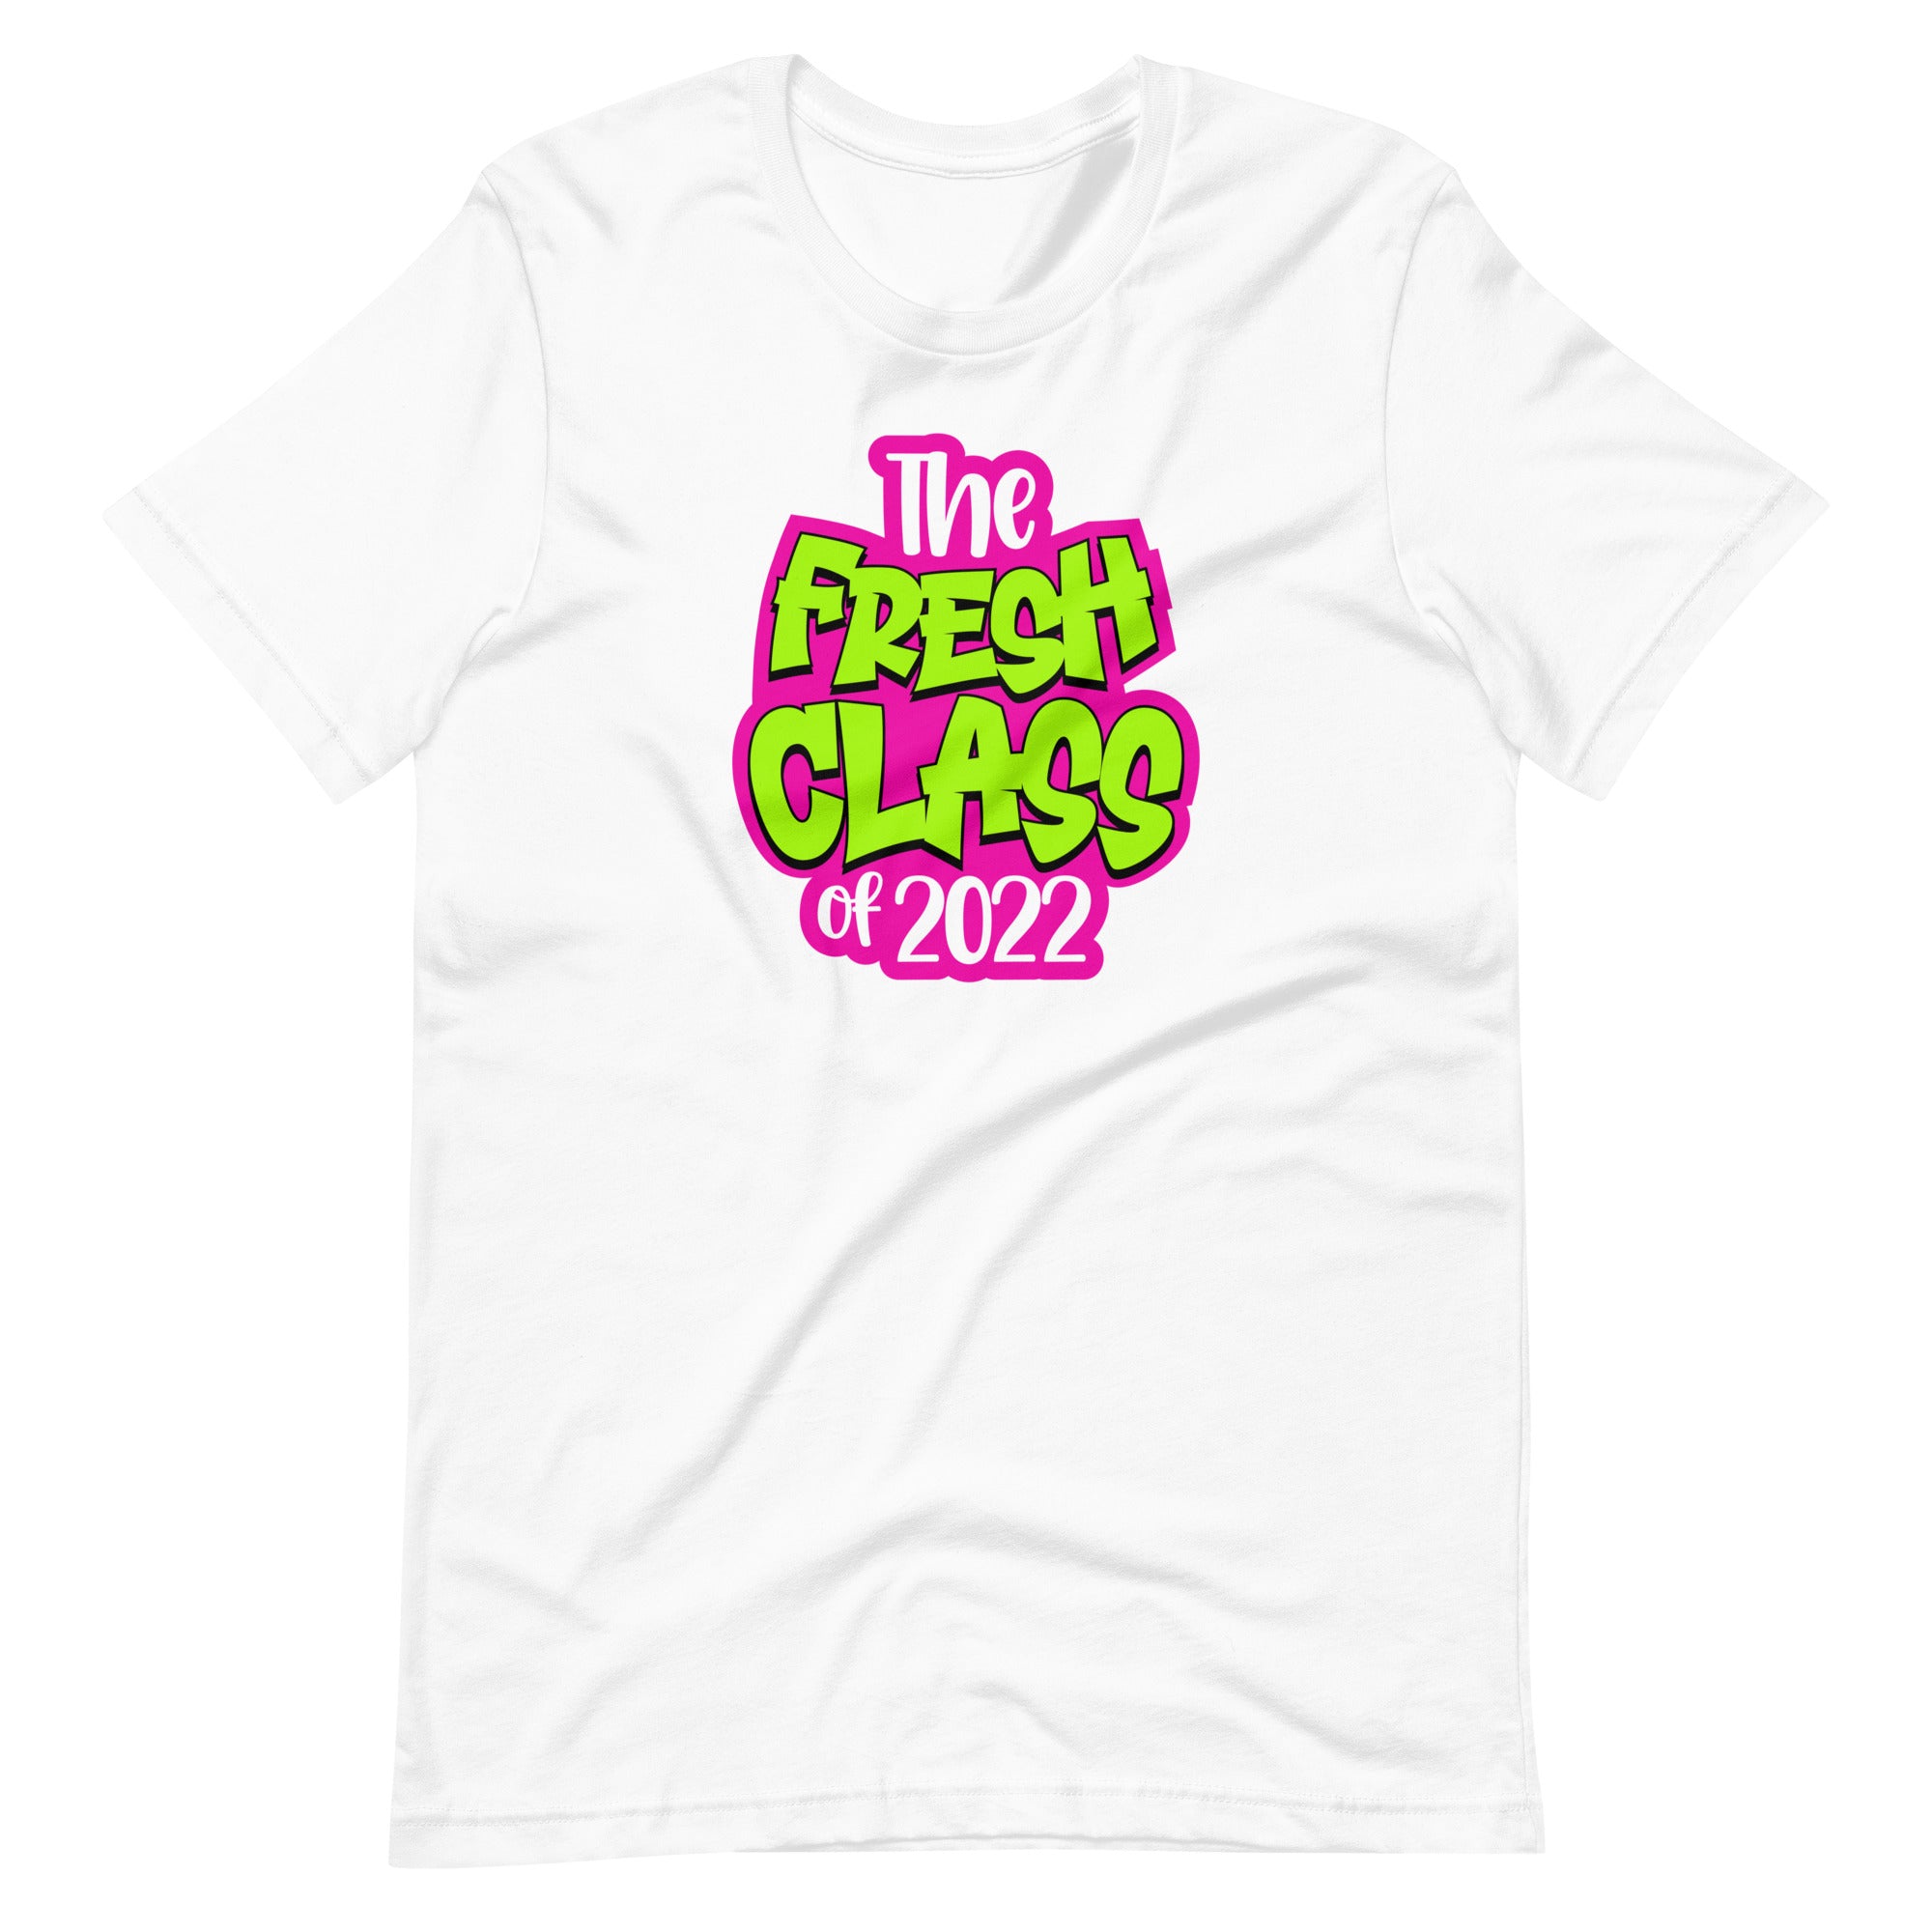 "The Fresh Class of 22" Unisex t-shirt